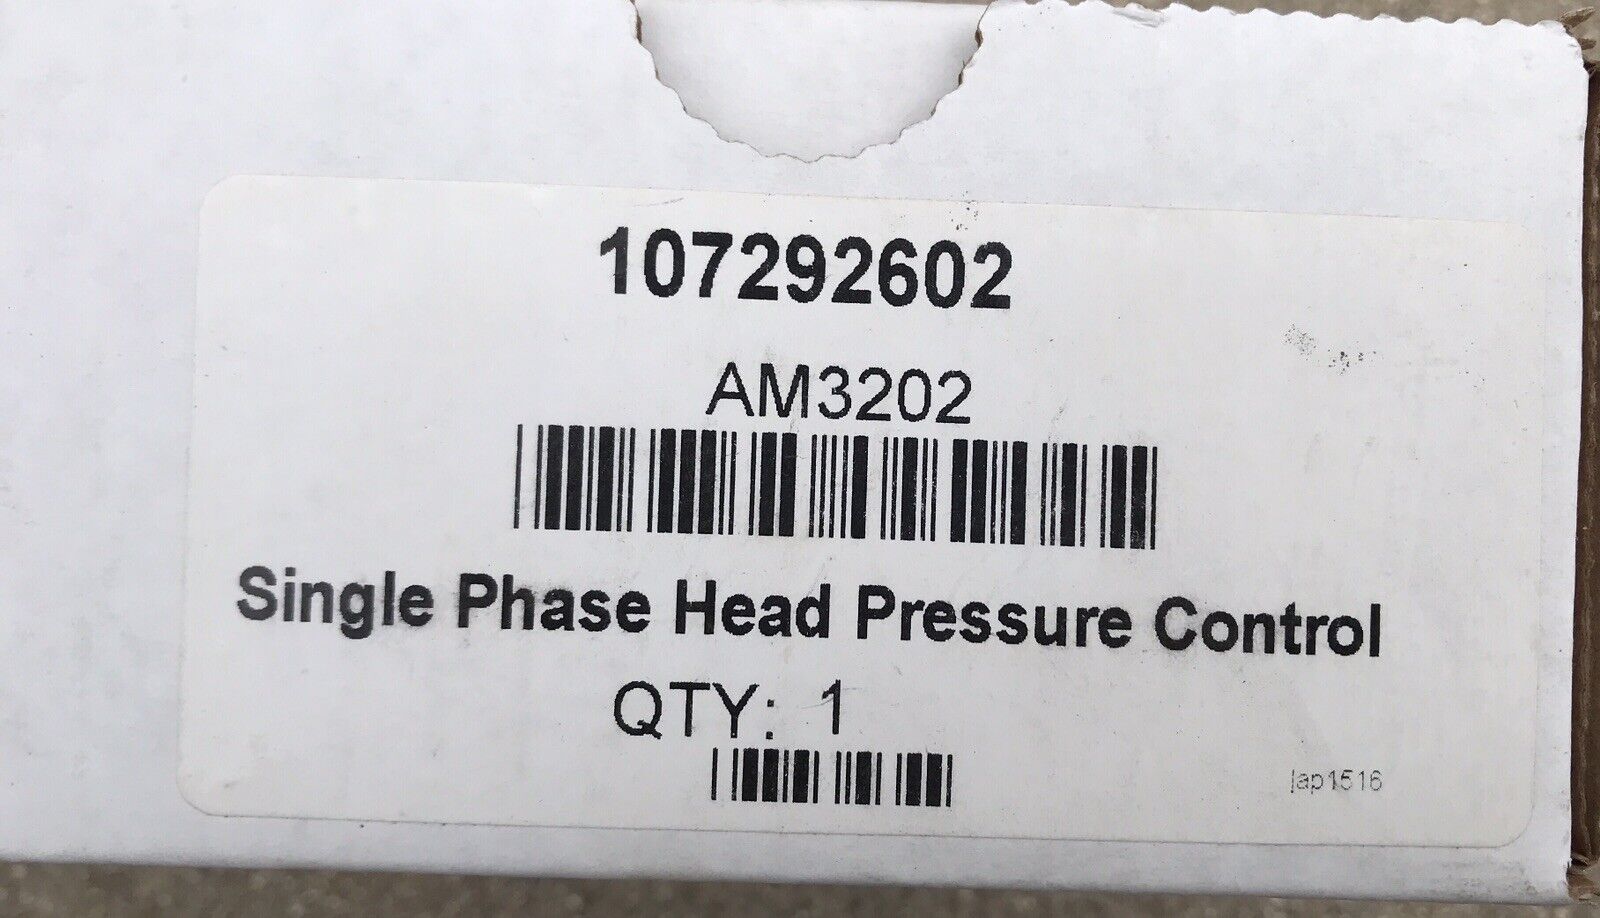 ICM CONTROLS AM3202 Single Phase Head Pressure Control part #107292602